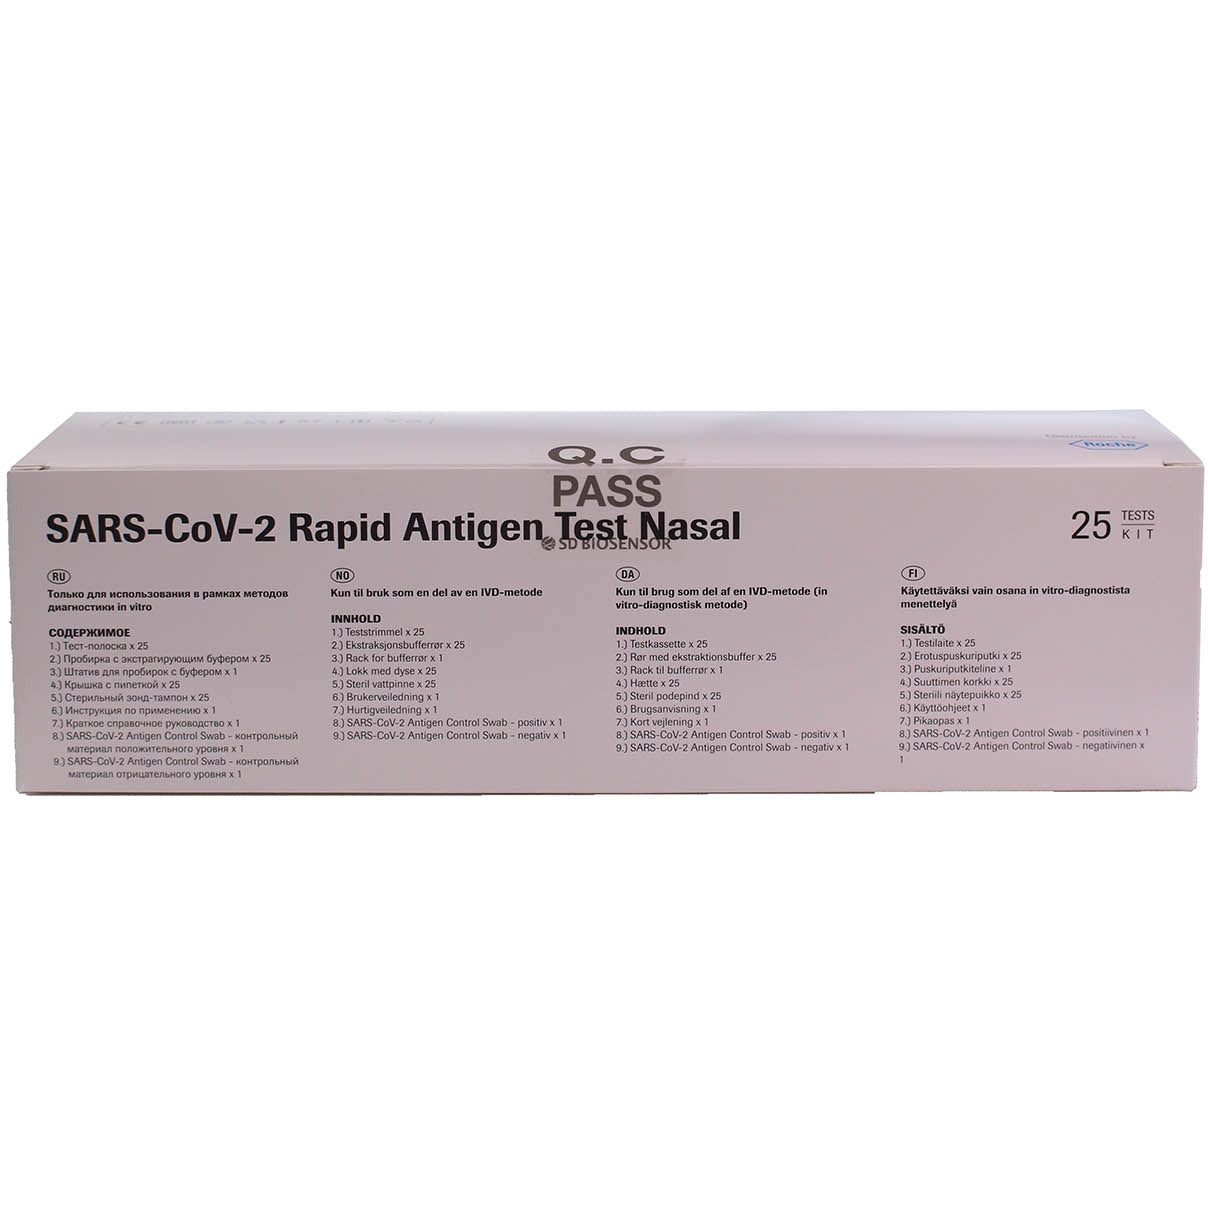 Roche COVID-19 Rapid Antigen Nasal Test Kit x 25 (MIN invasive!) - CLEARANCE